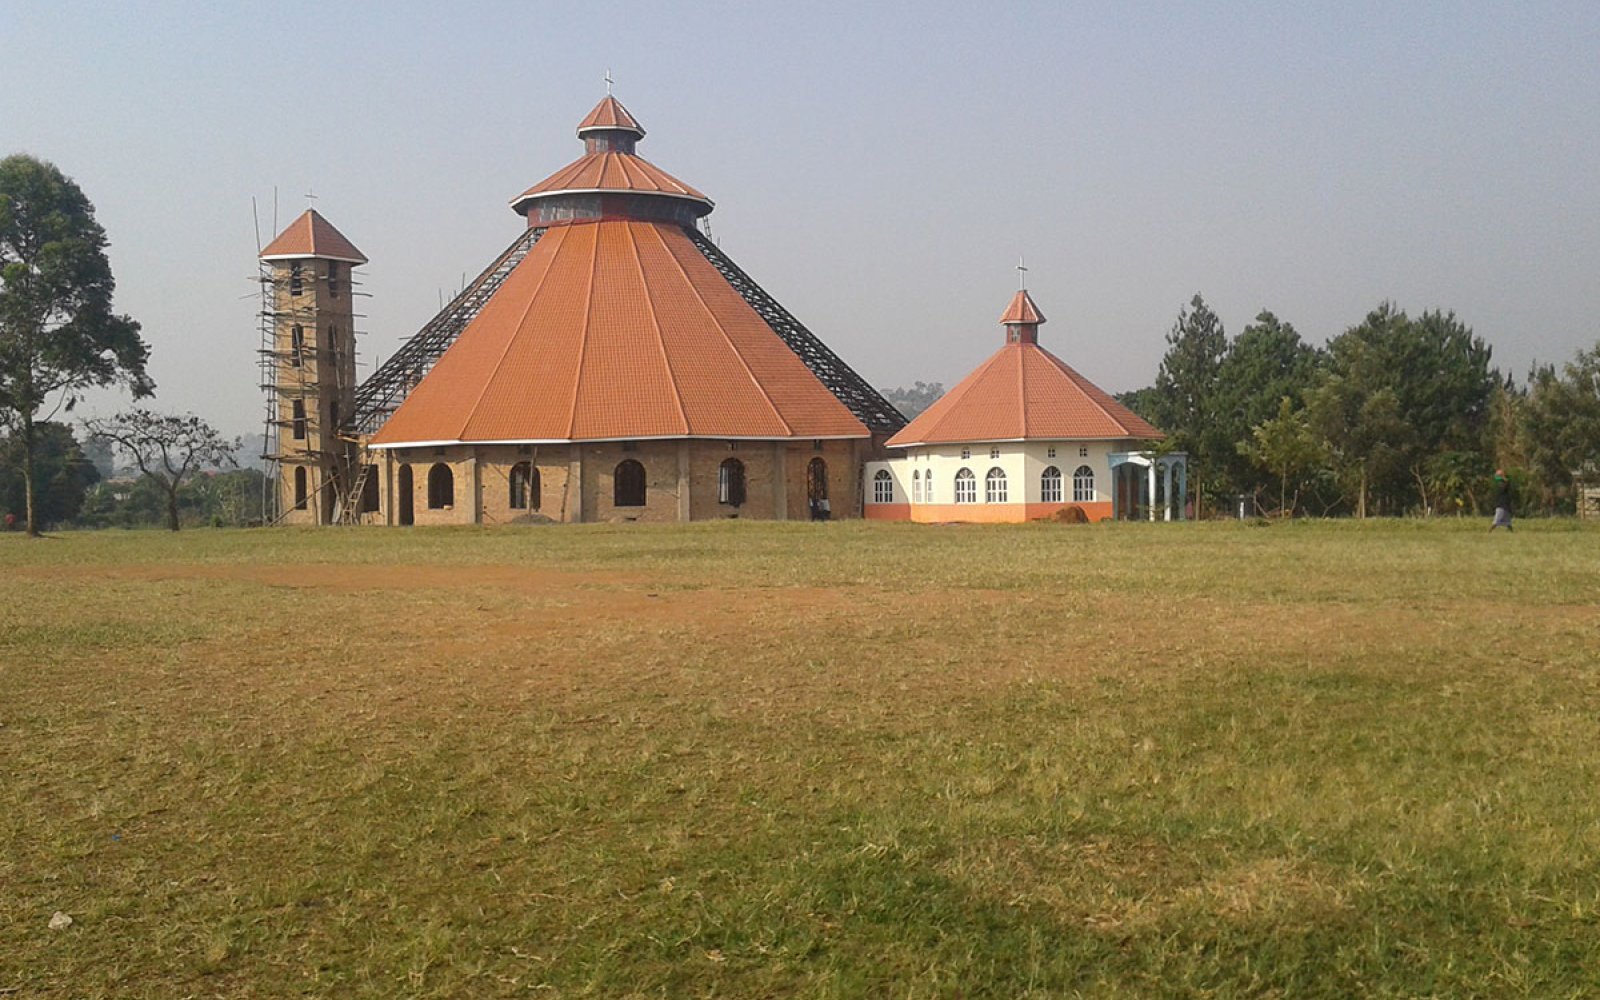 St Andrews parish centre in Uganda, under construction